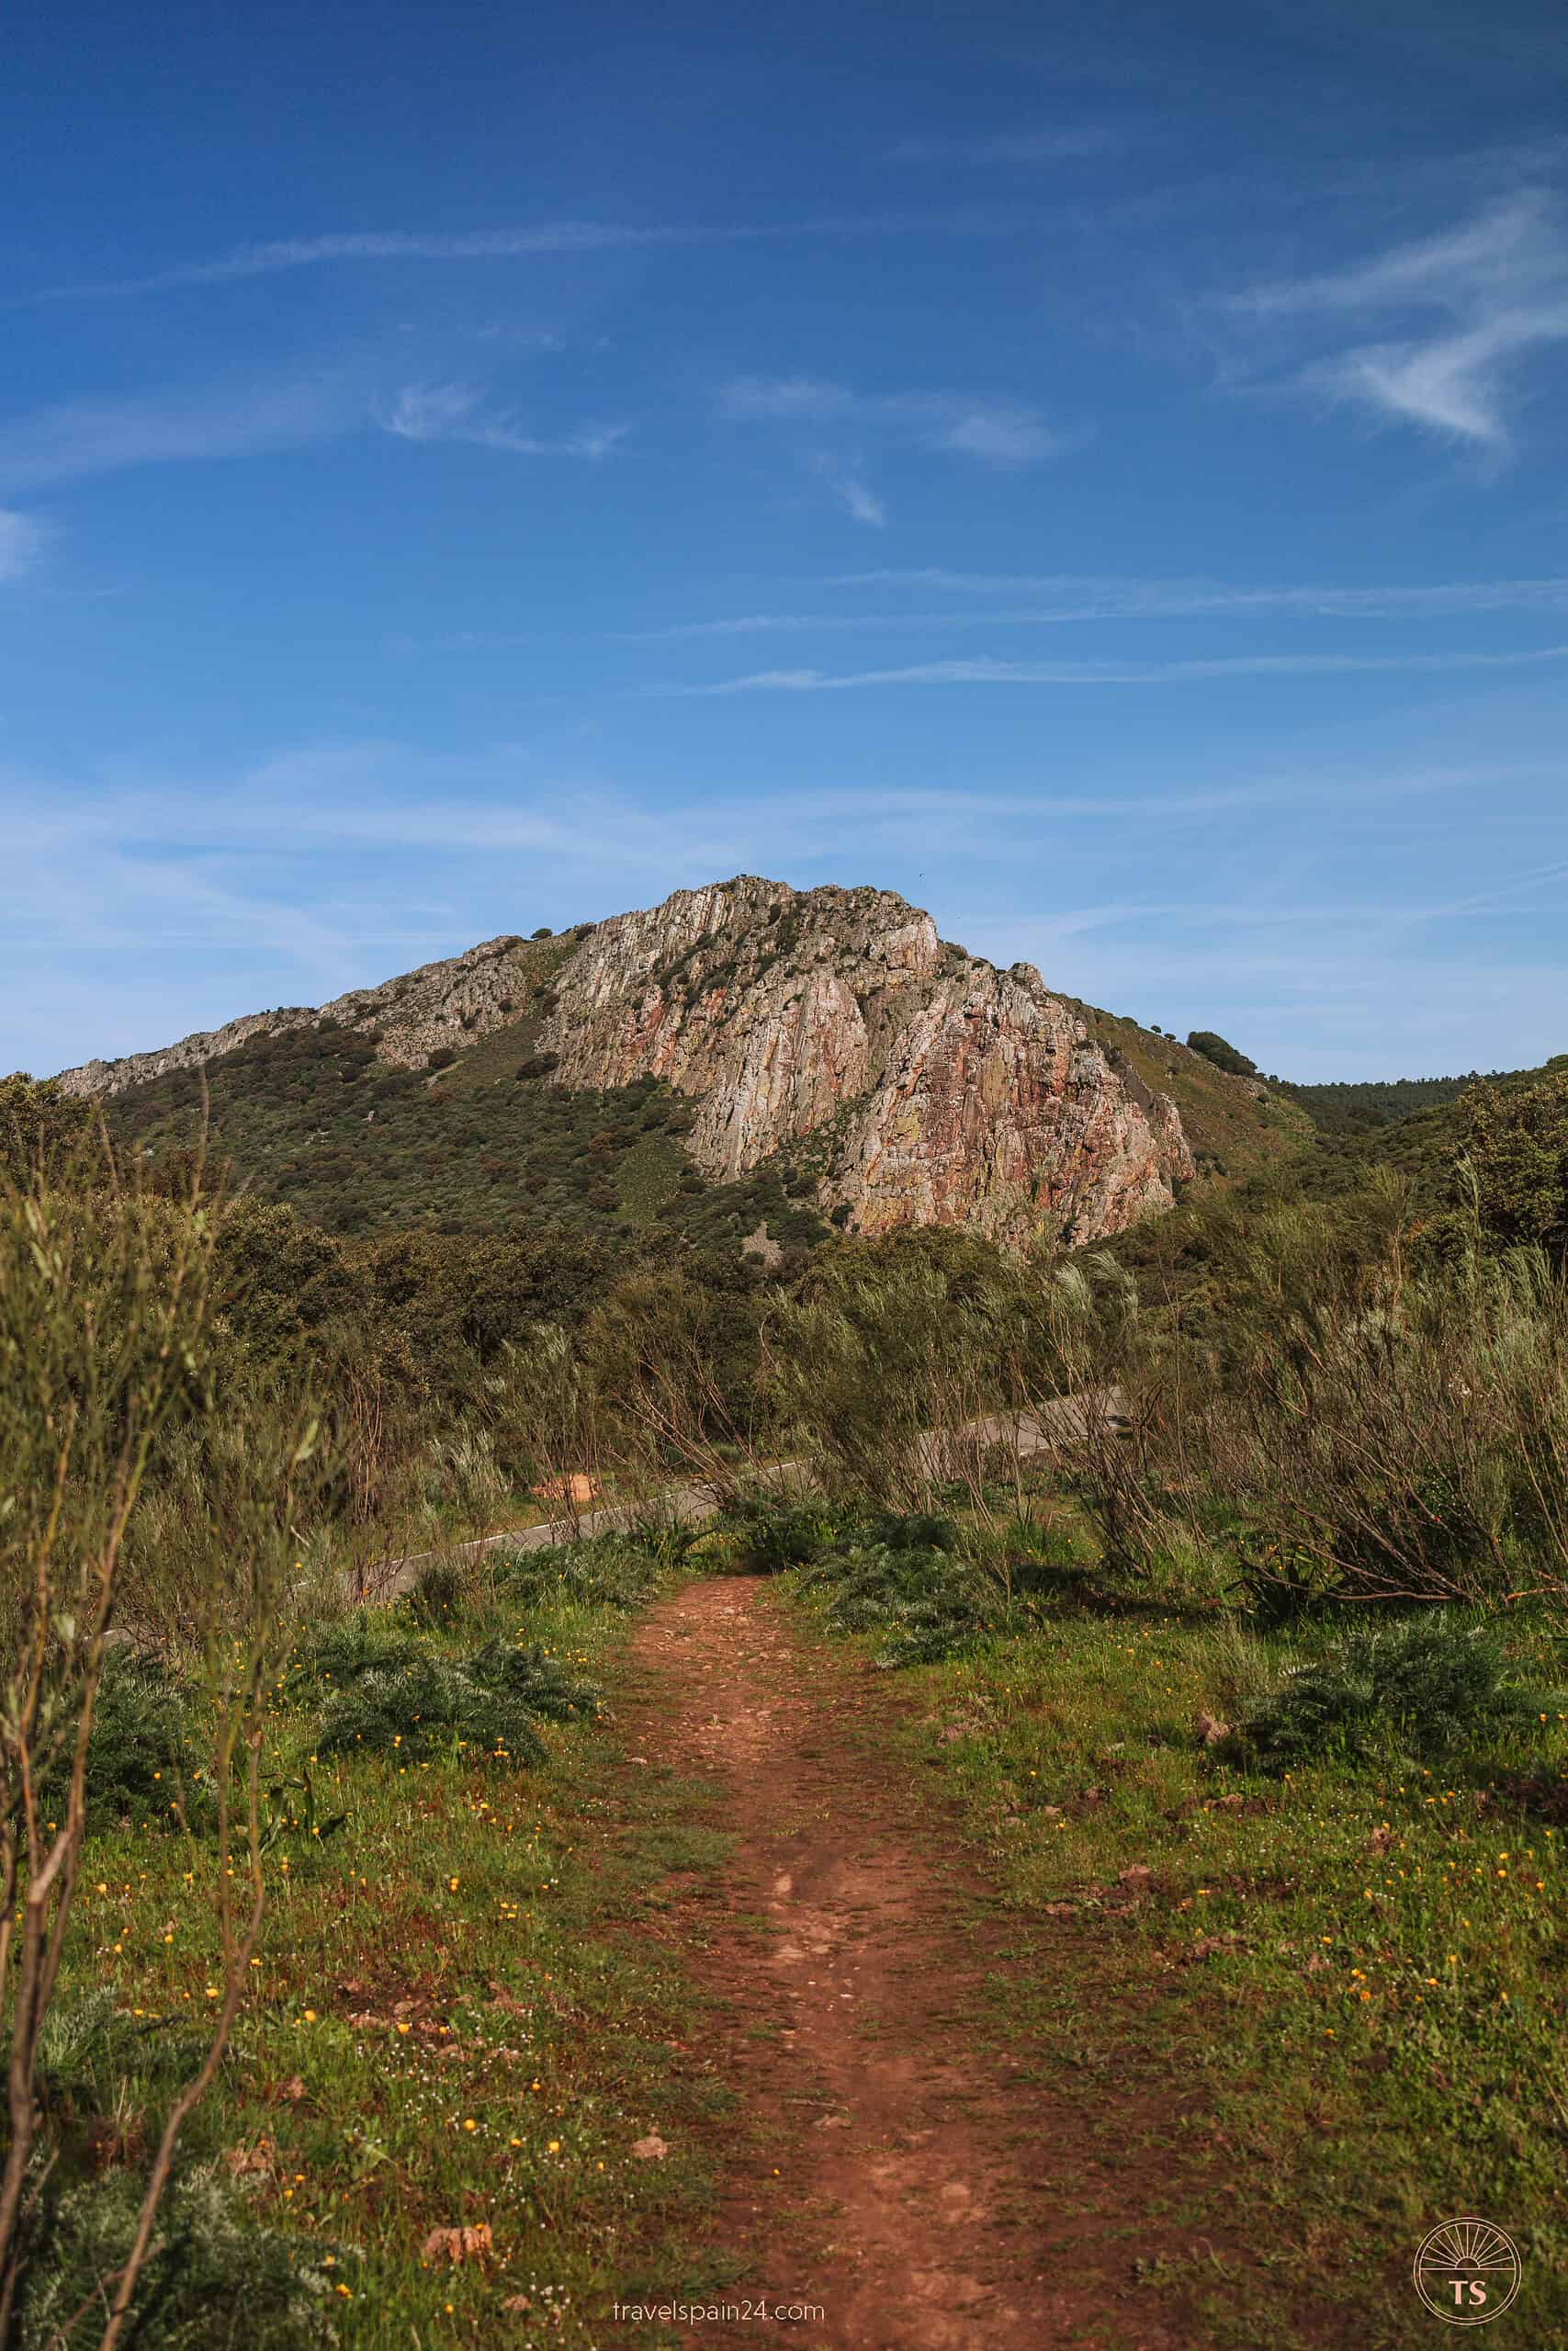 Road descending from the castle towards Salto del Gitano in Monfragüe, showcasing a key segment of the park's premier hiking trail.